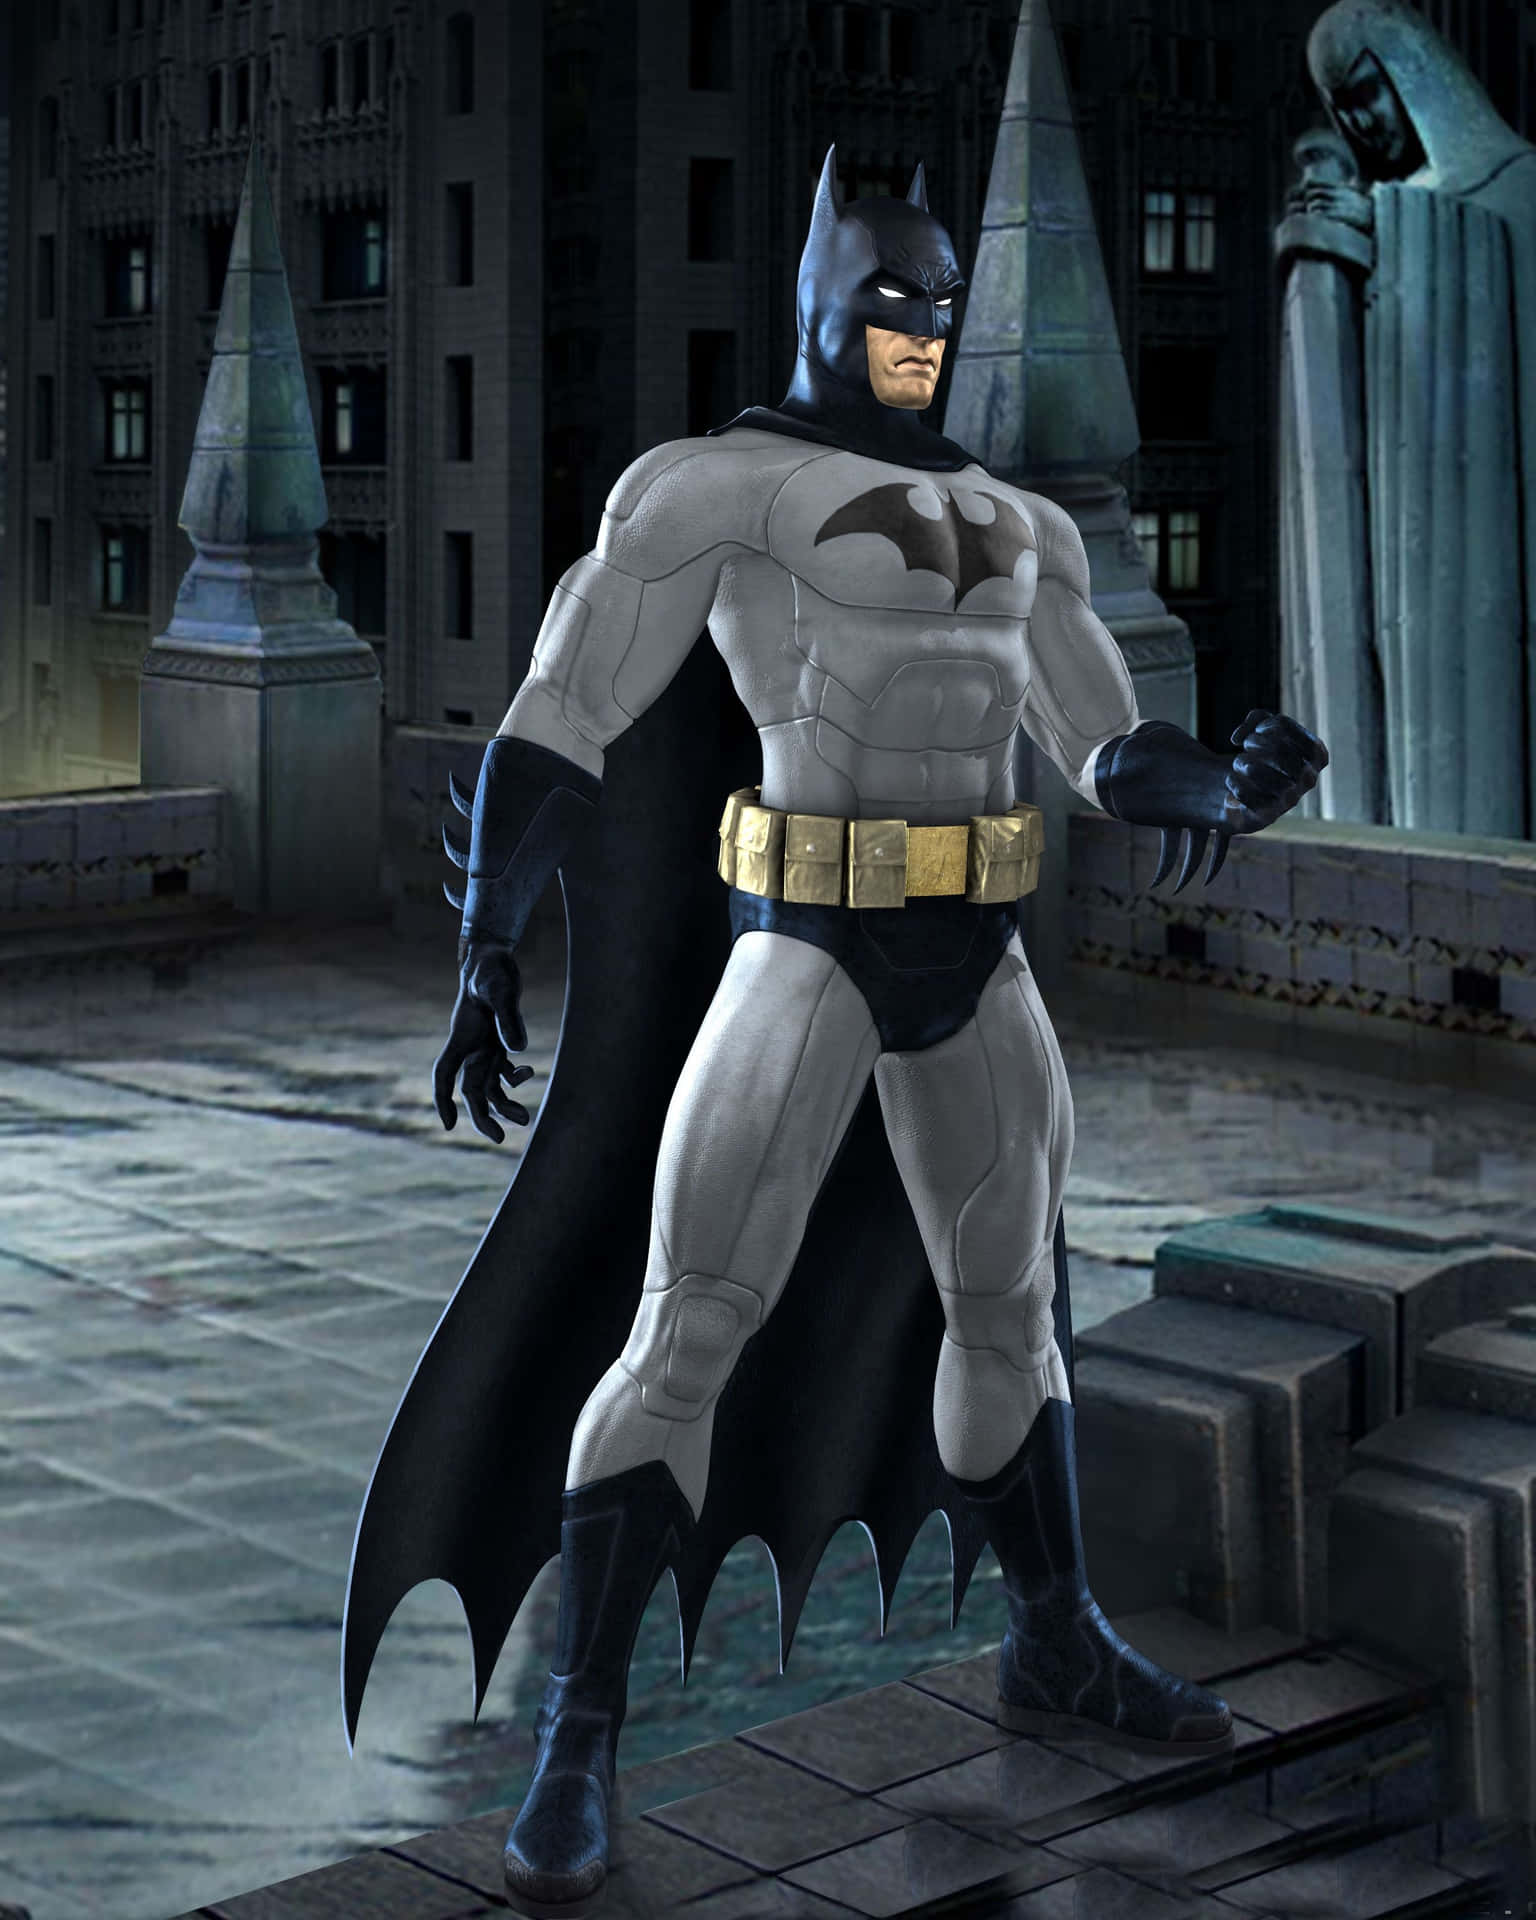 The Dark Knight, Batman, Ready To Fight Crime Wallpaper